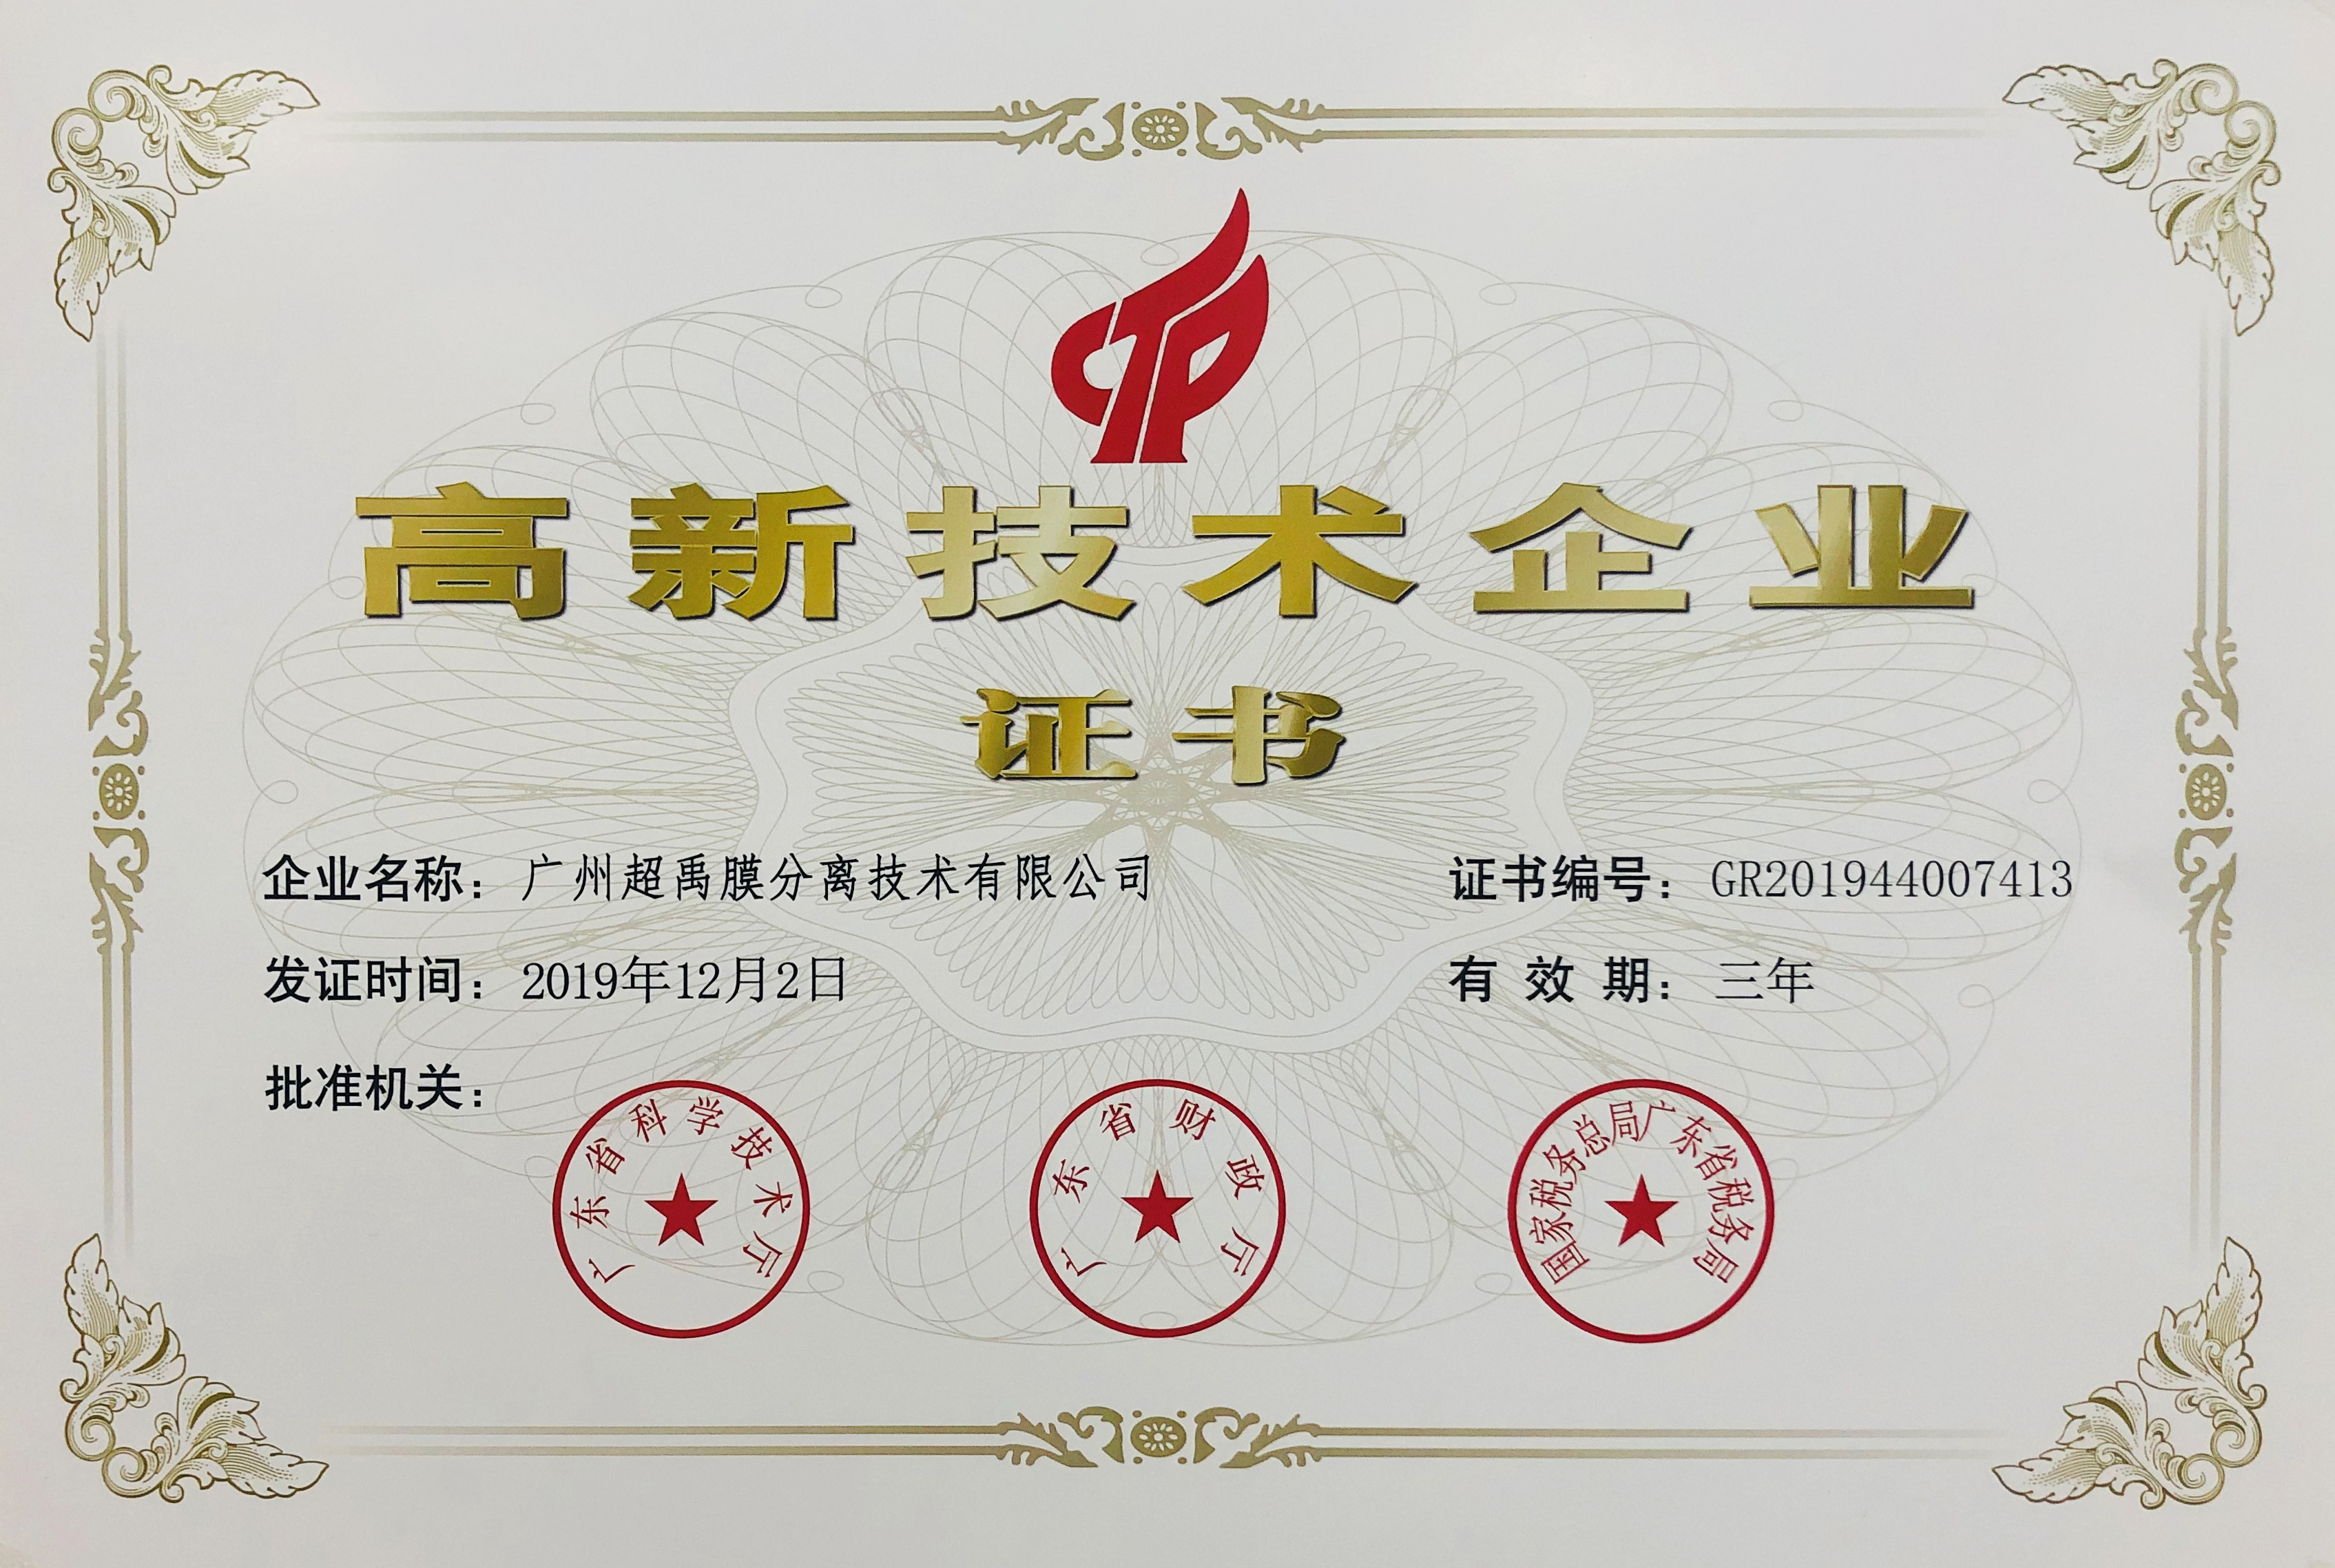 <b>热烈祝贺我司荣获“广东省高新技术企业”称号</b>